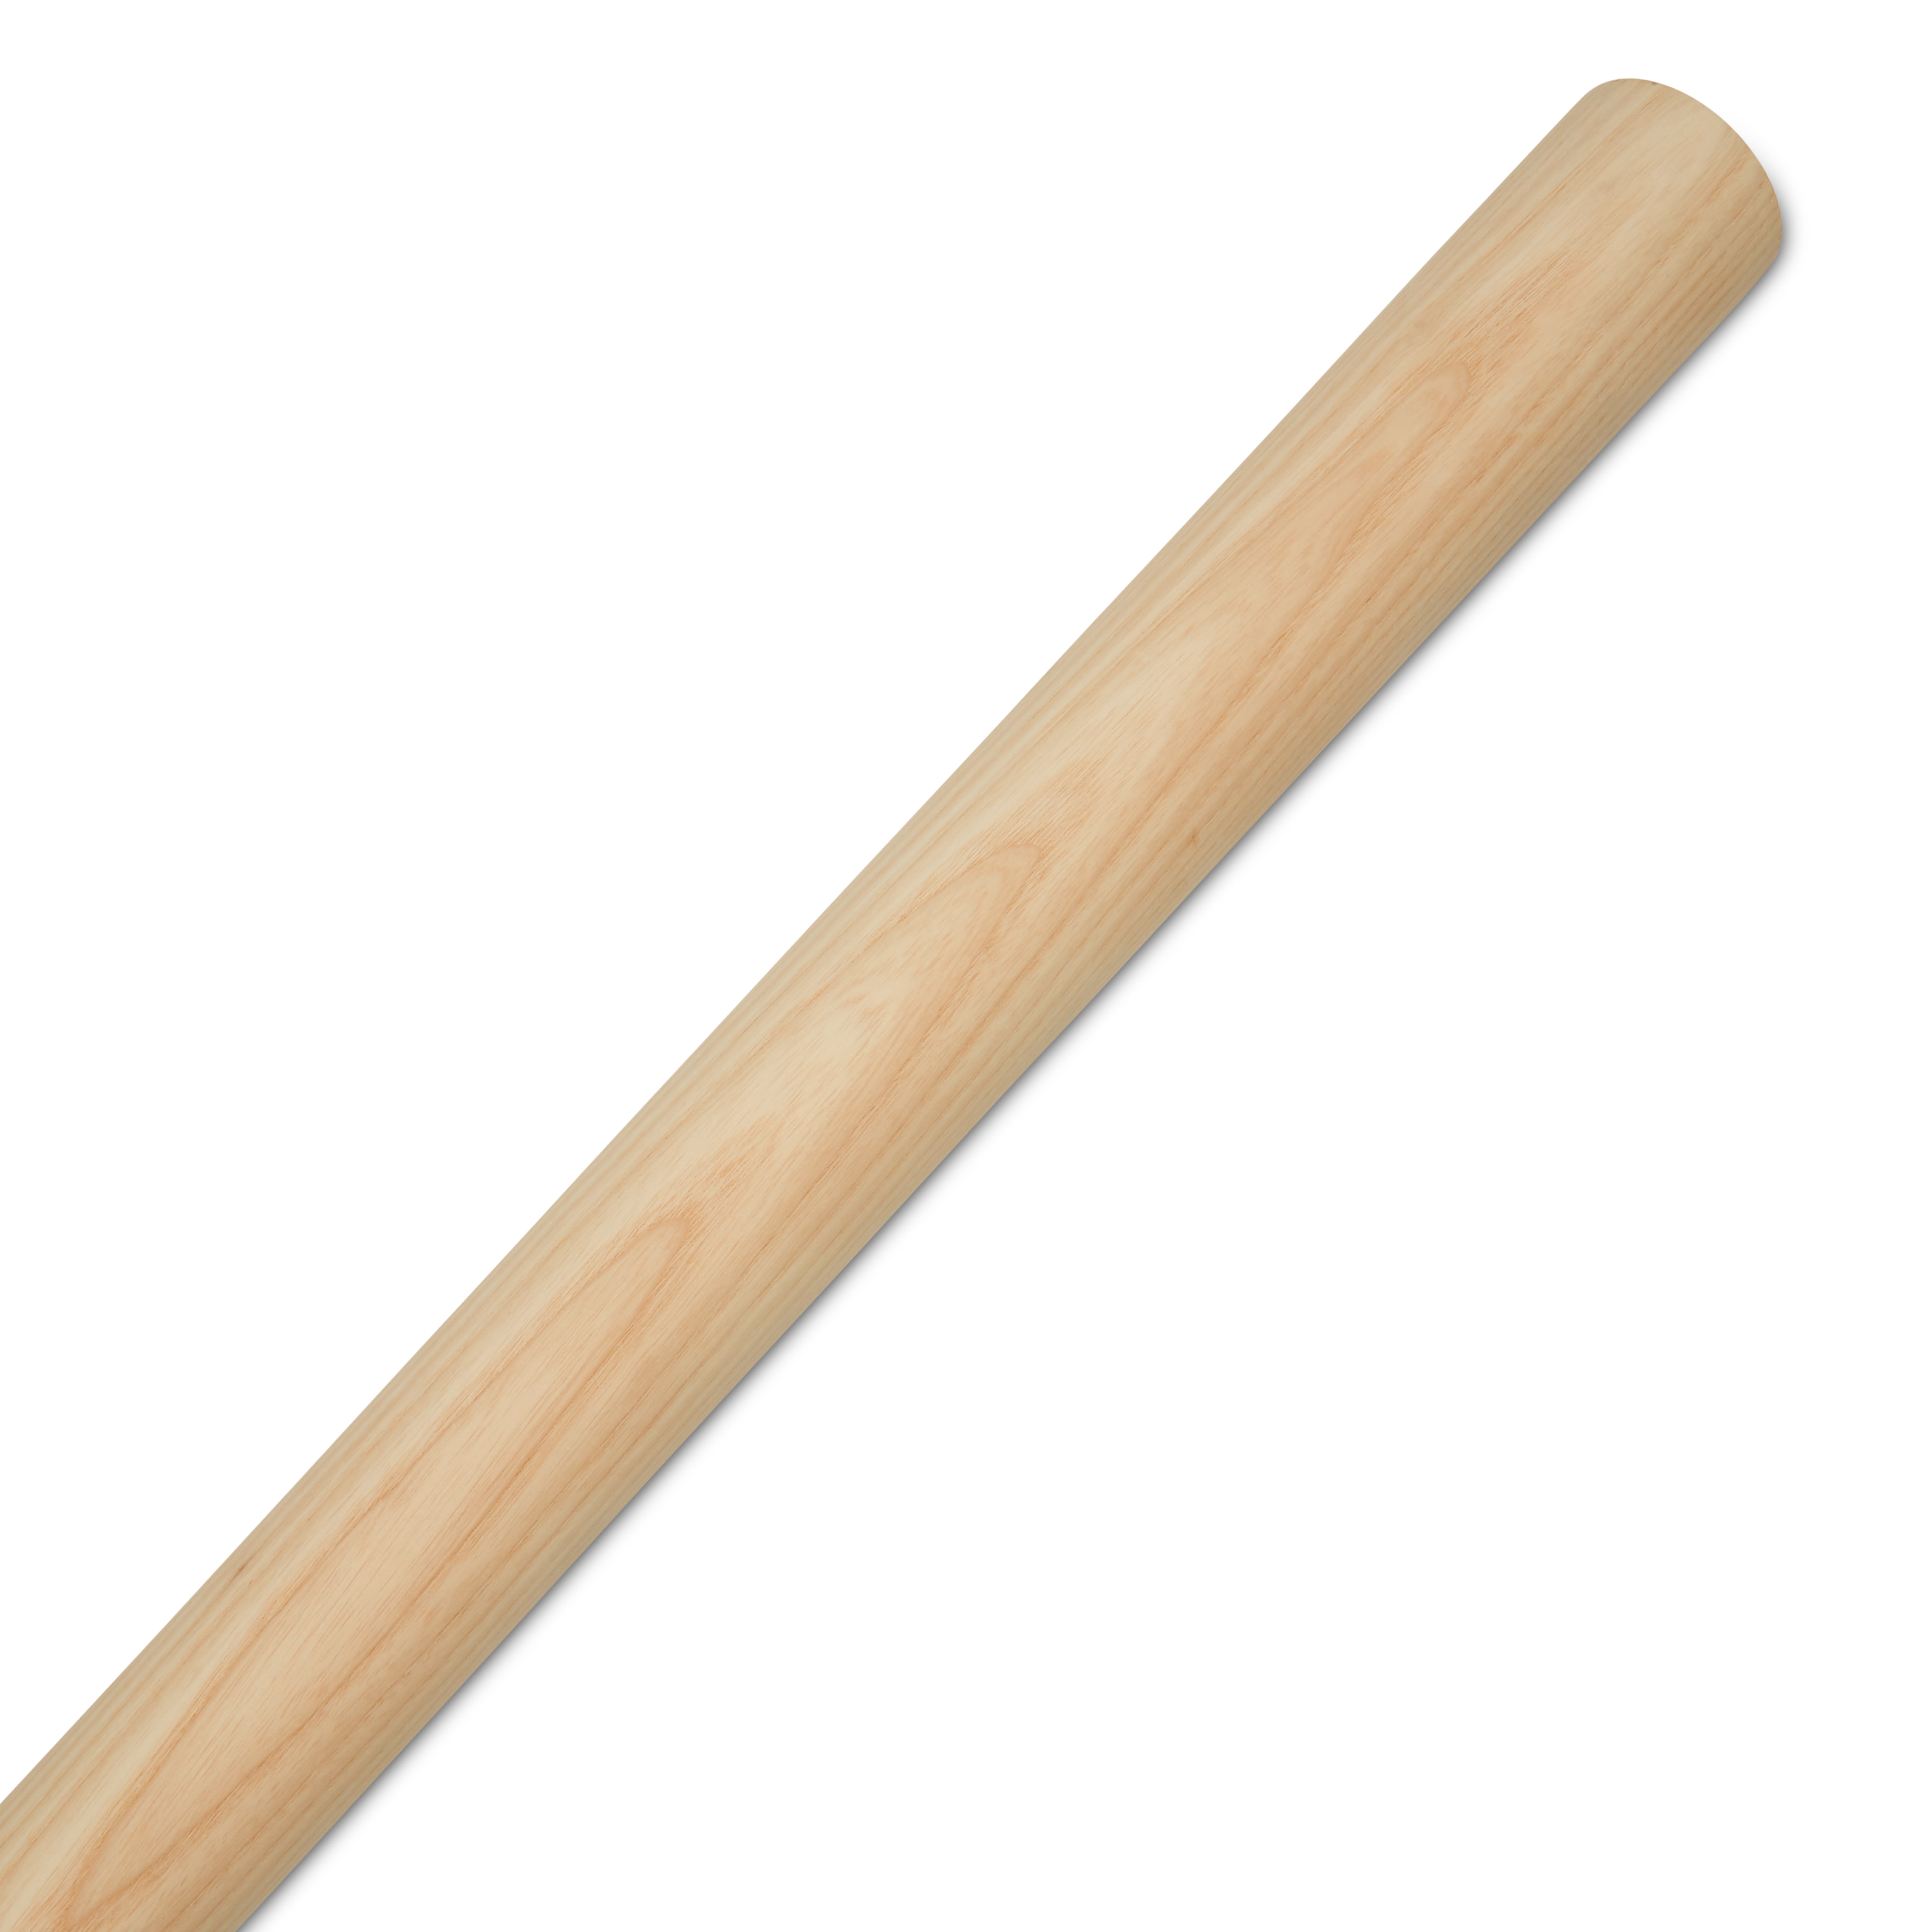 Dowel Rods Wood Sticks Wooden Dowel Rods - 1/2 x 48 Inch